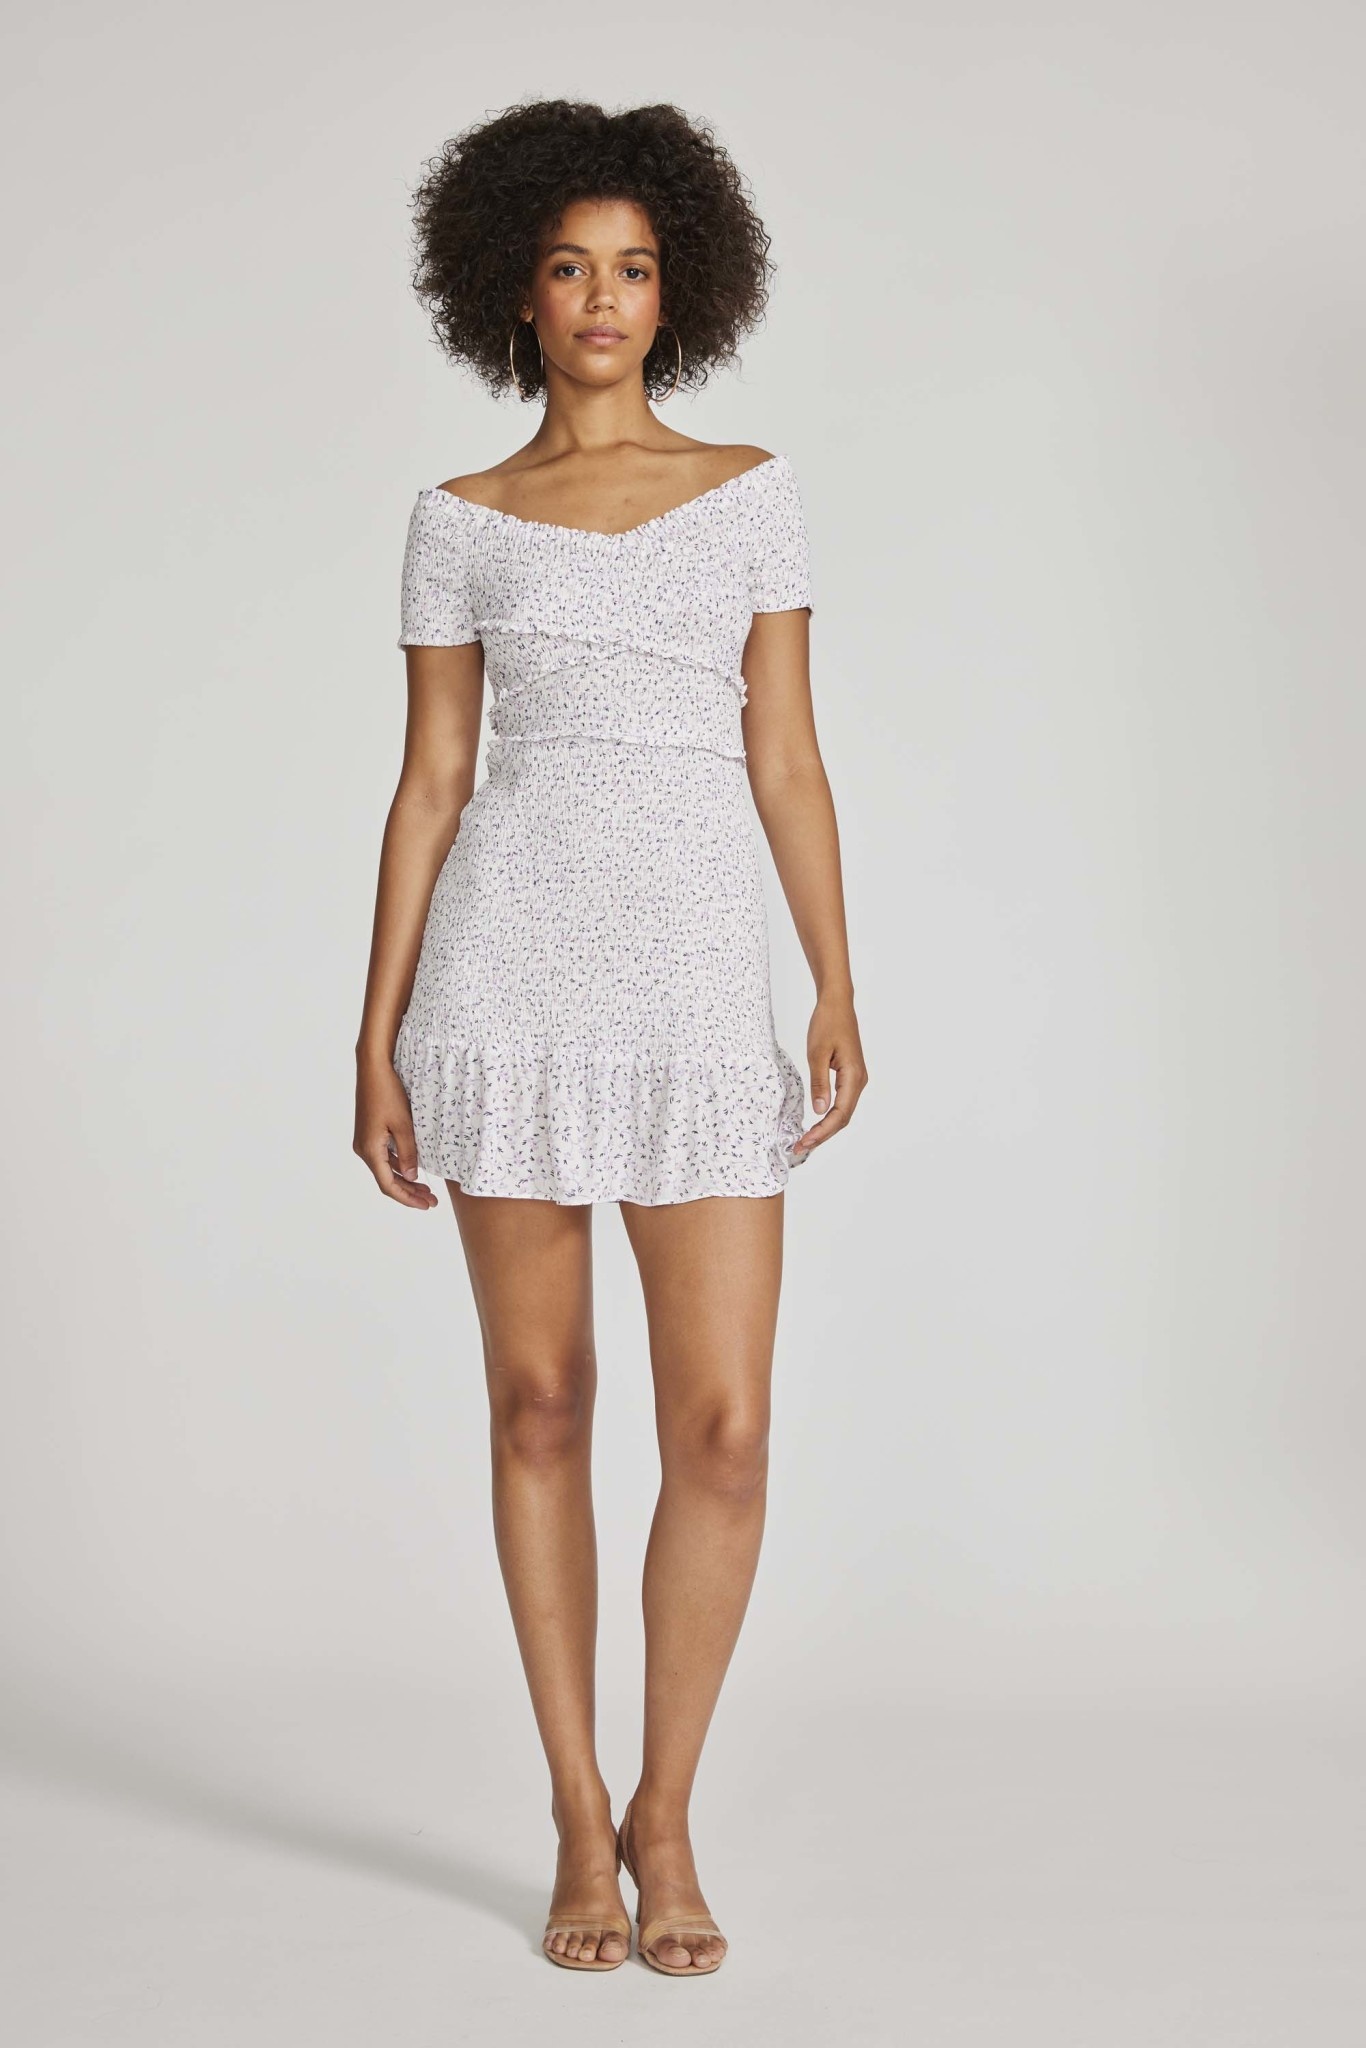 Rom Com Mini Dress White